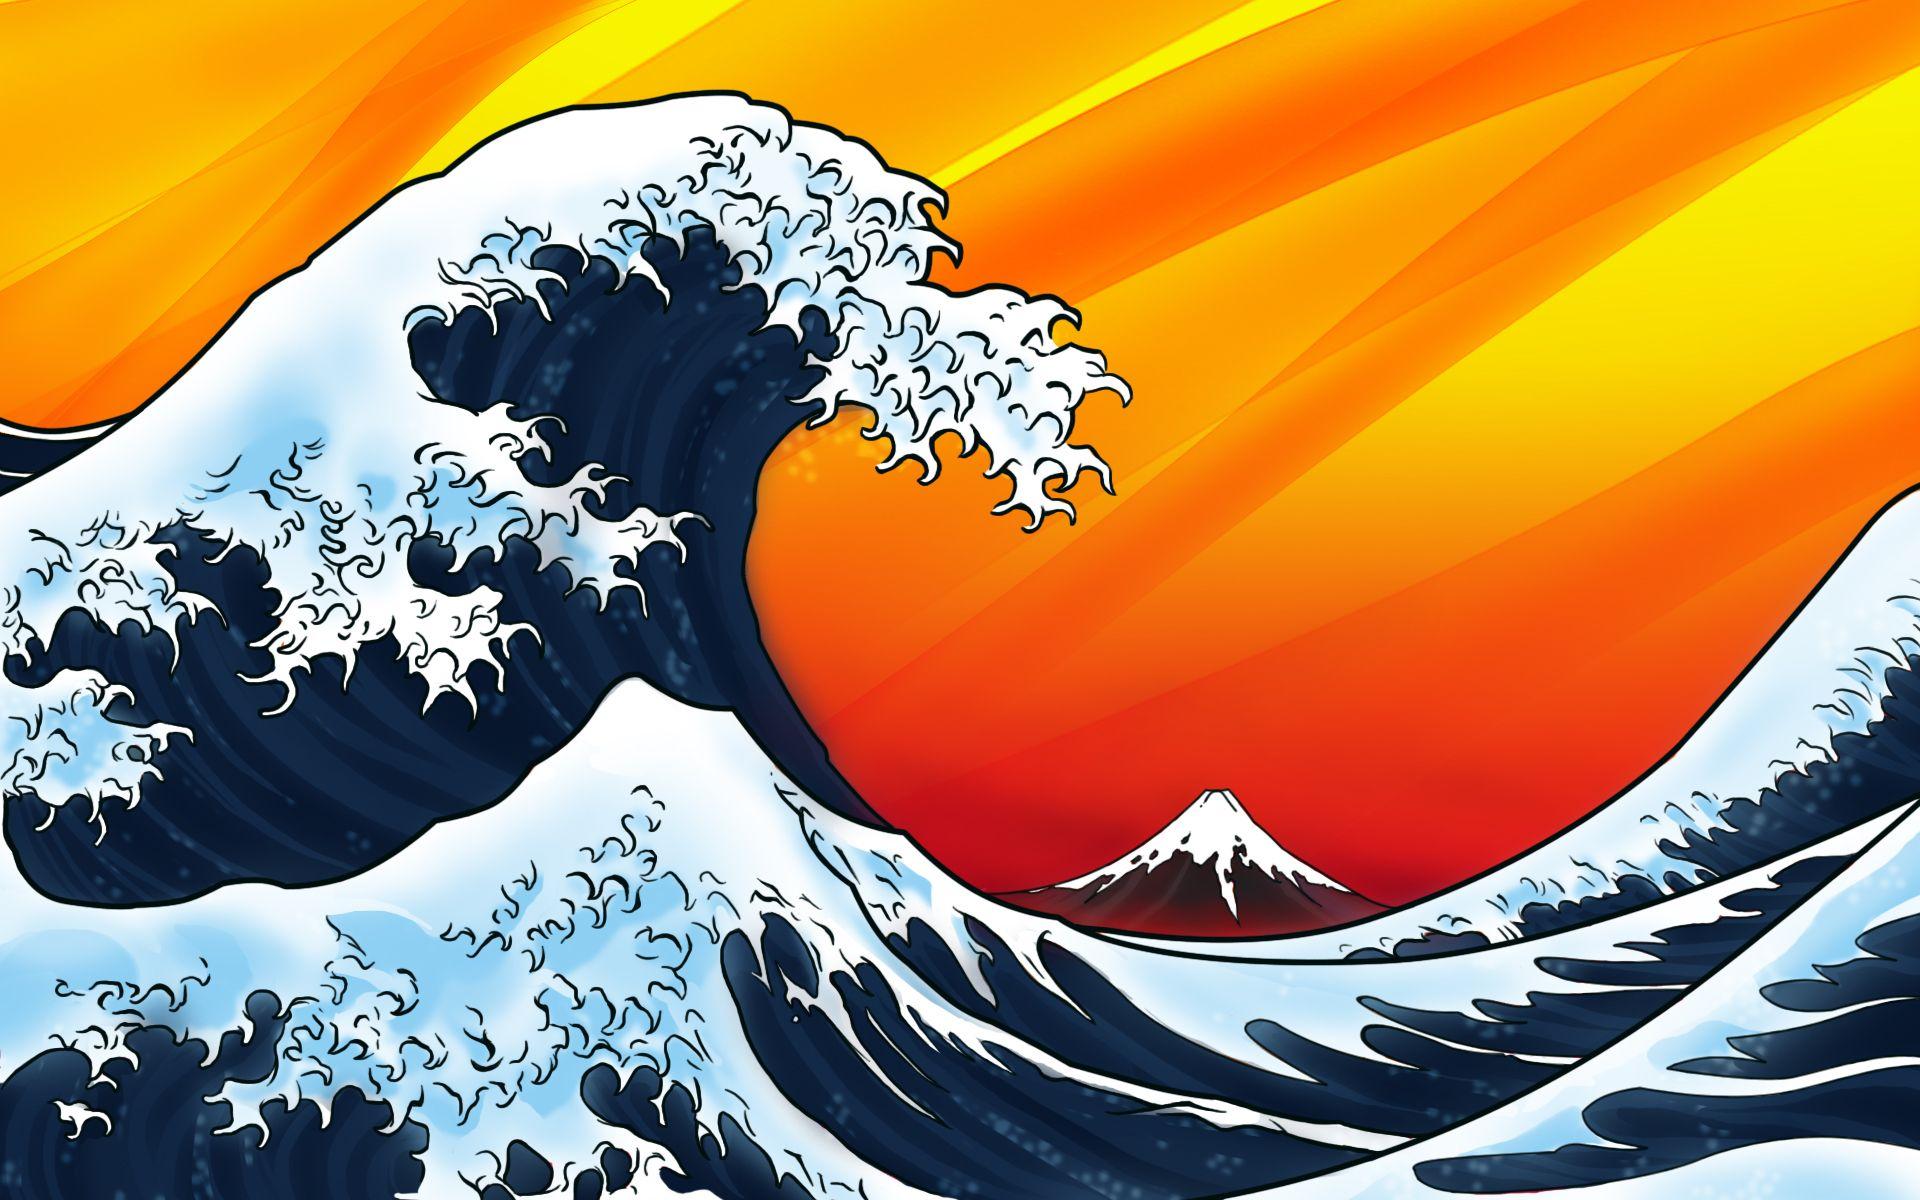 The great wave off kanagawa katsushika hokusai wallpaper